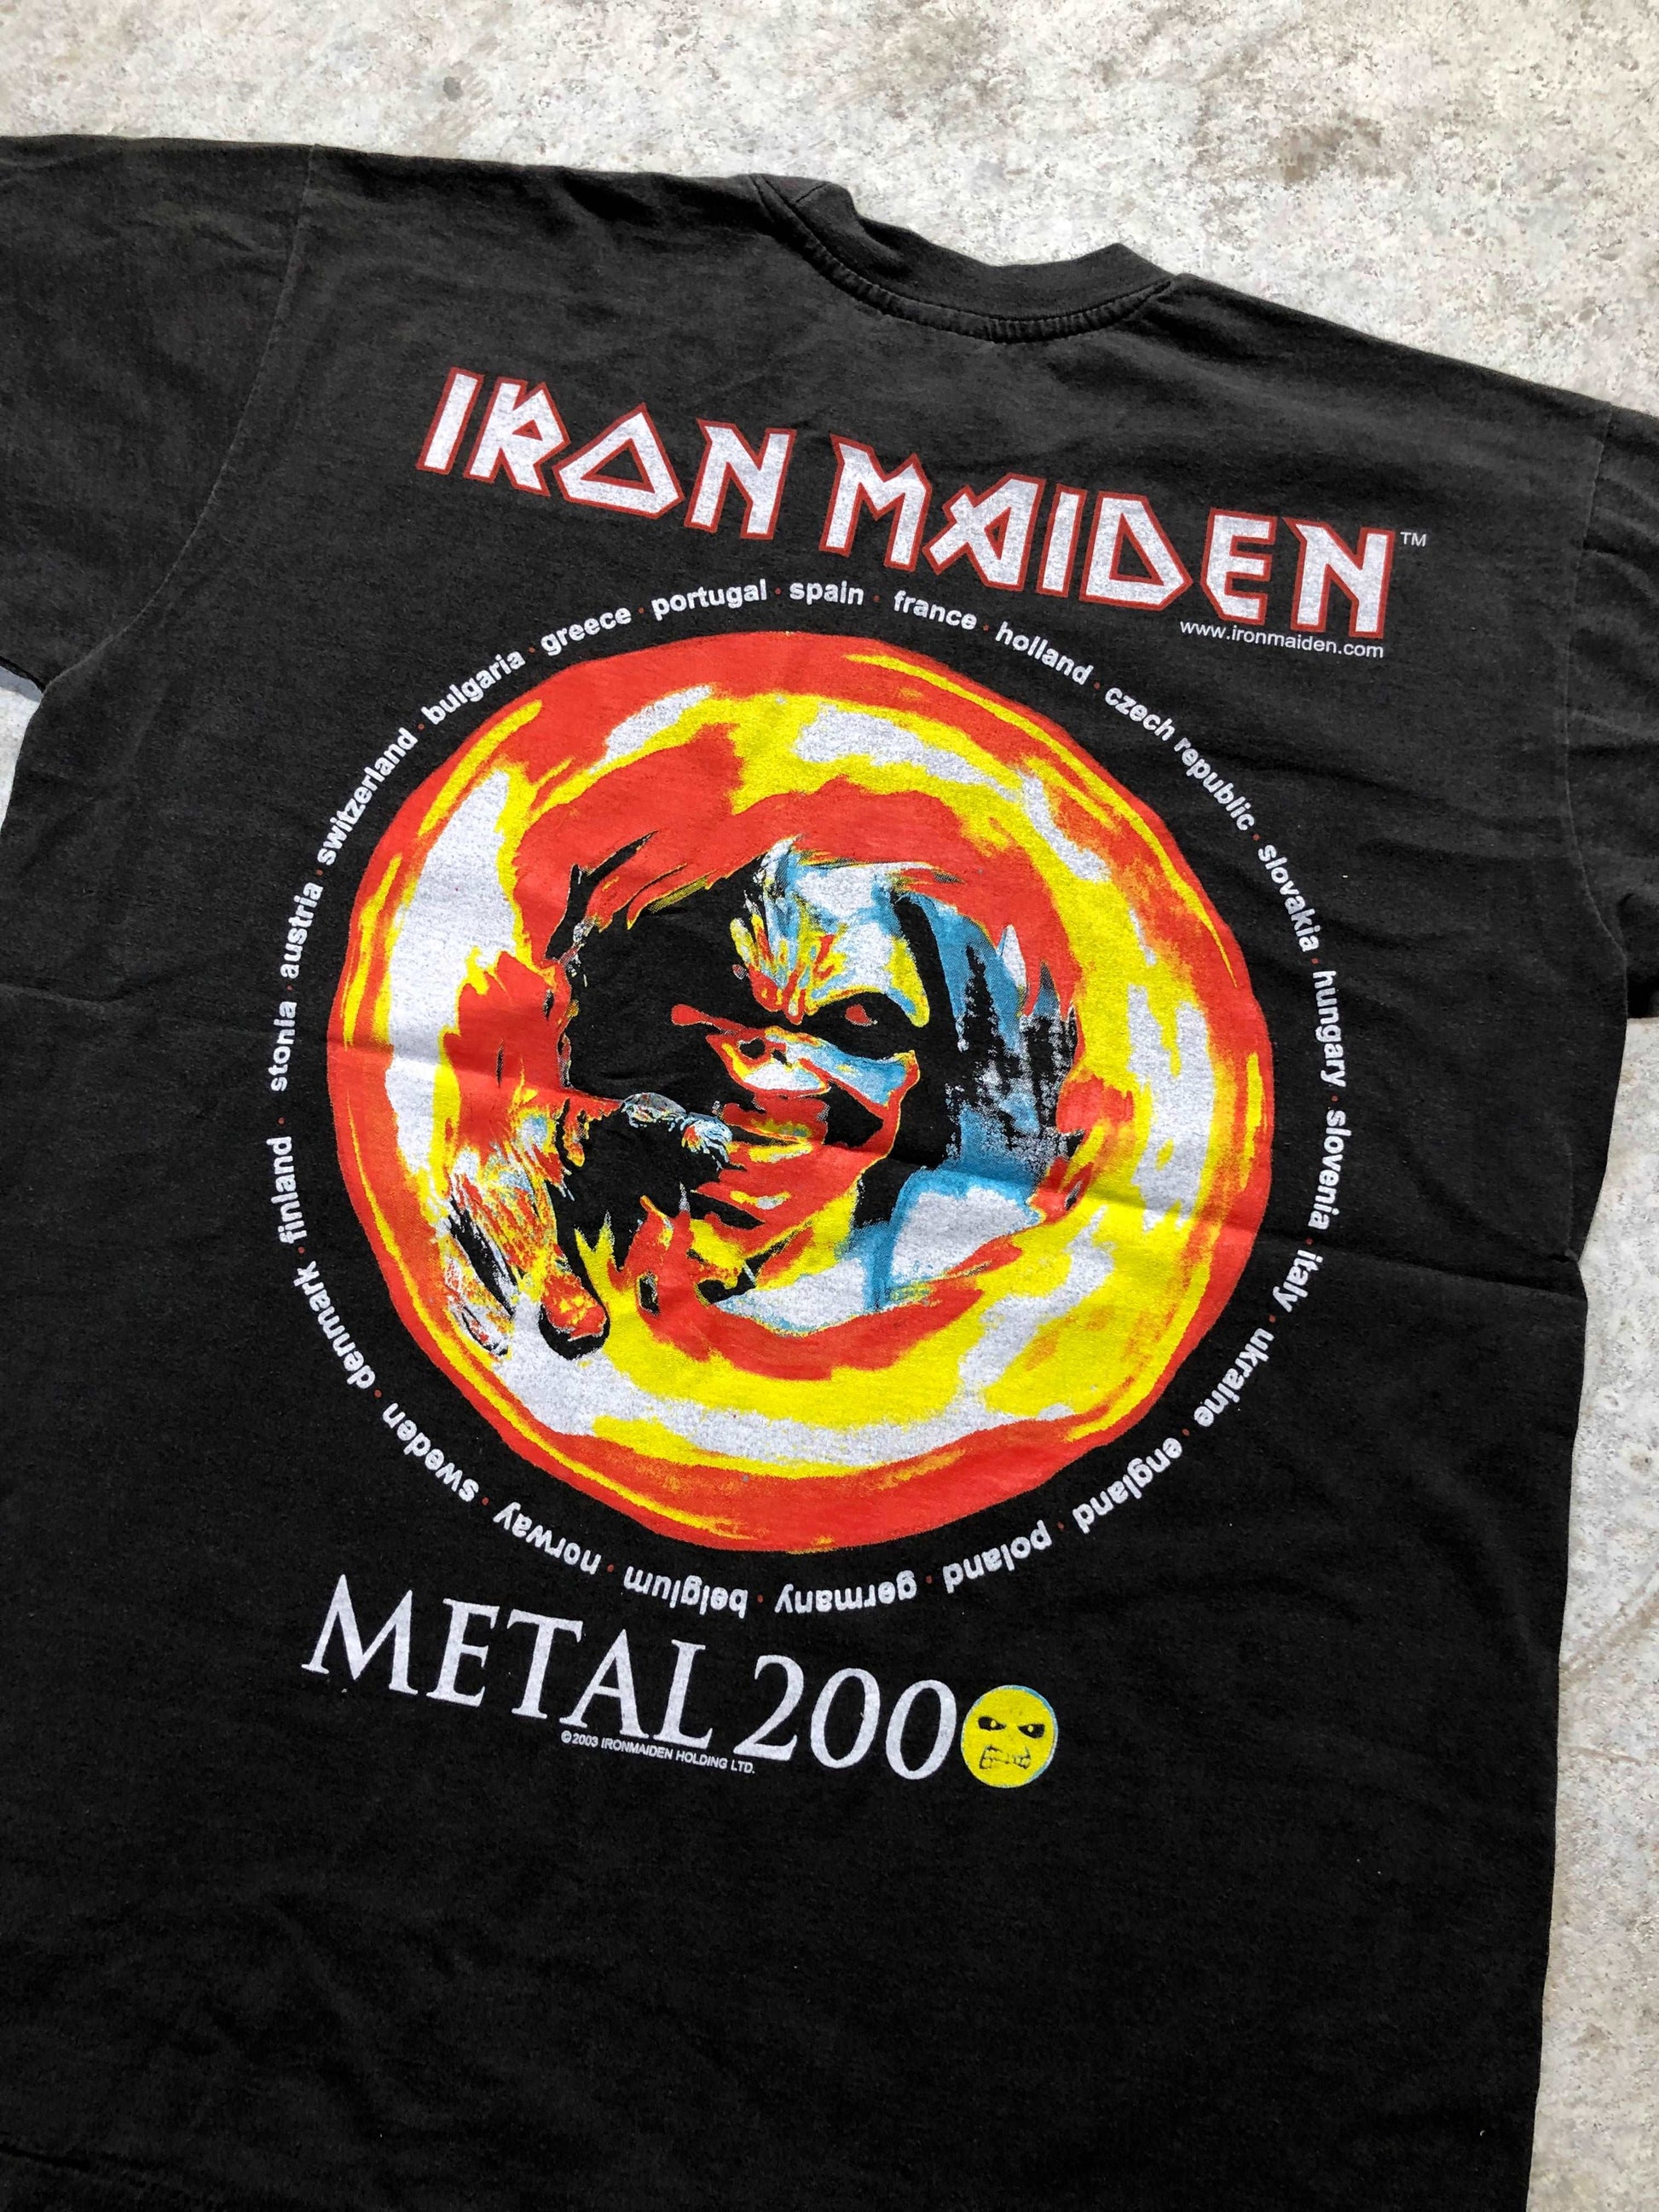 2003 Iron Maiden Metal Tour Tee (Large), Tee - Vintage64.com